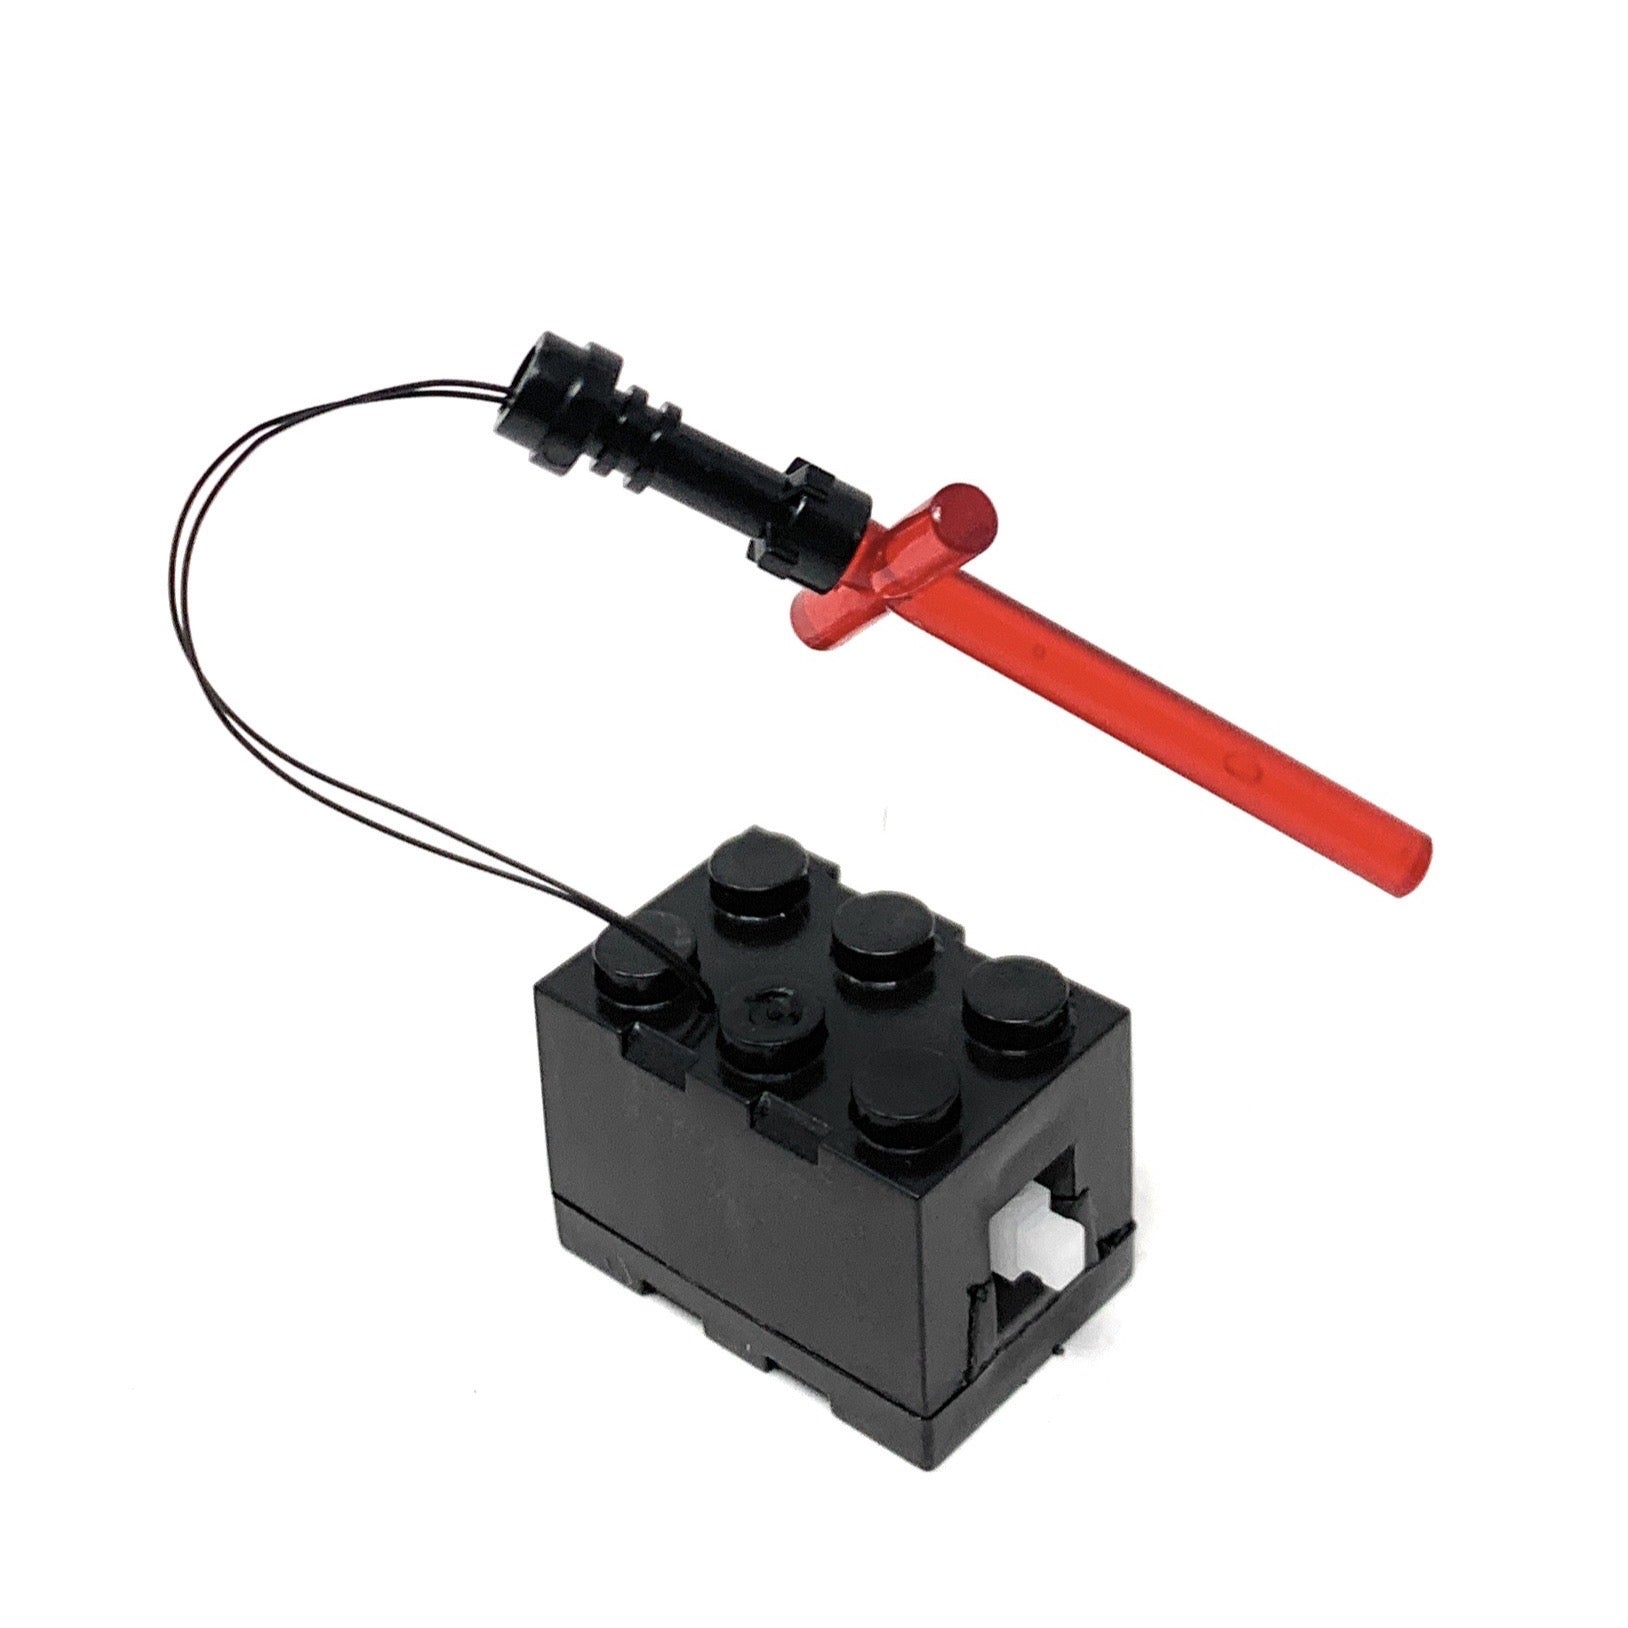 Crossguard Light-Up Minifigure Lightsaber (Red)